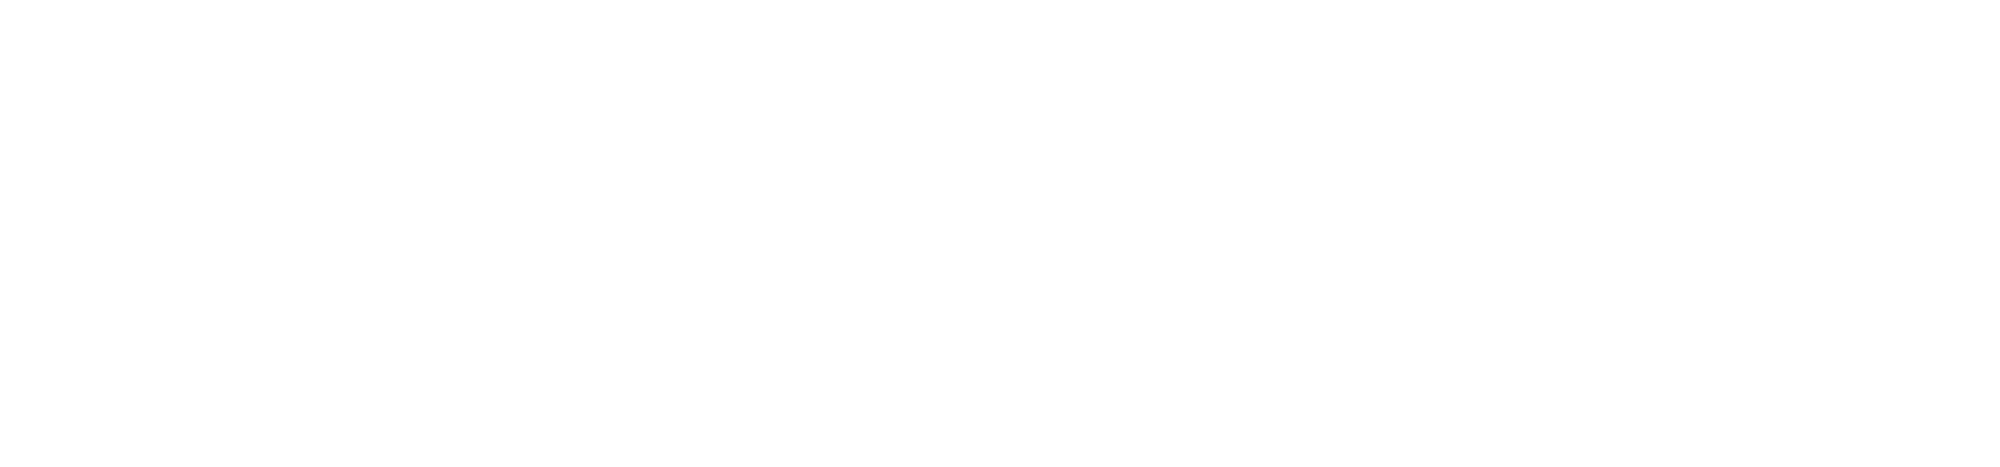 ScholarLead Logo White